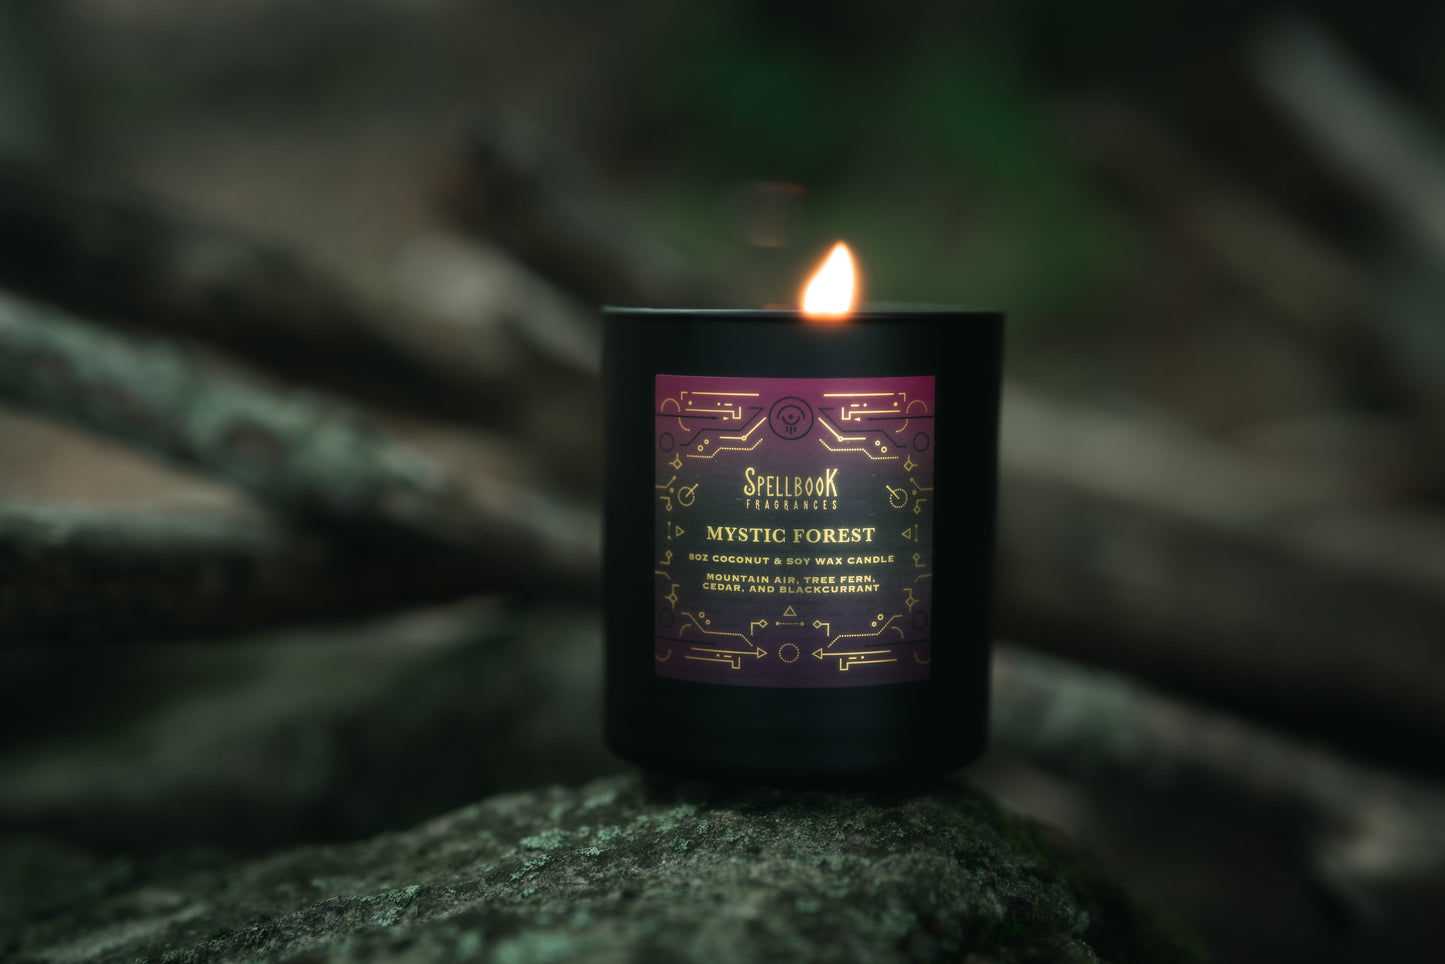 Mystic Forest 8 oz Candle - Spellbook Fragrances